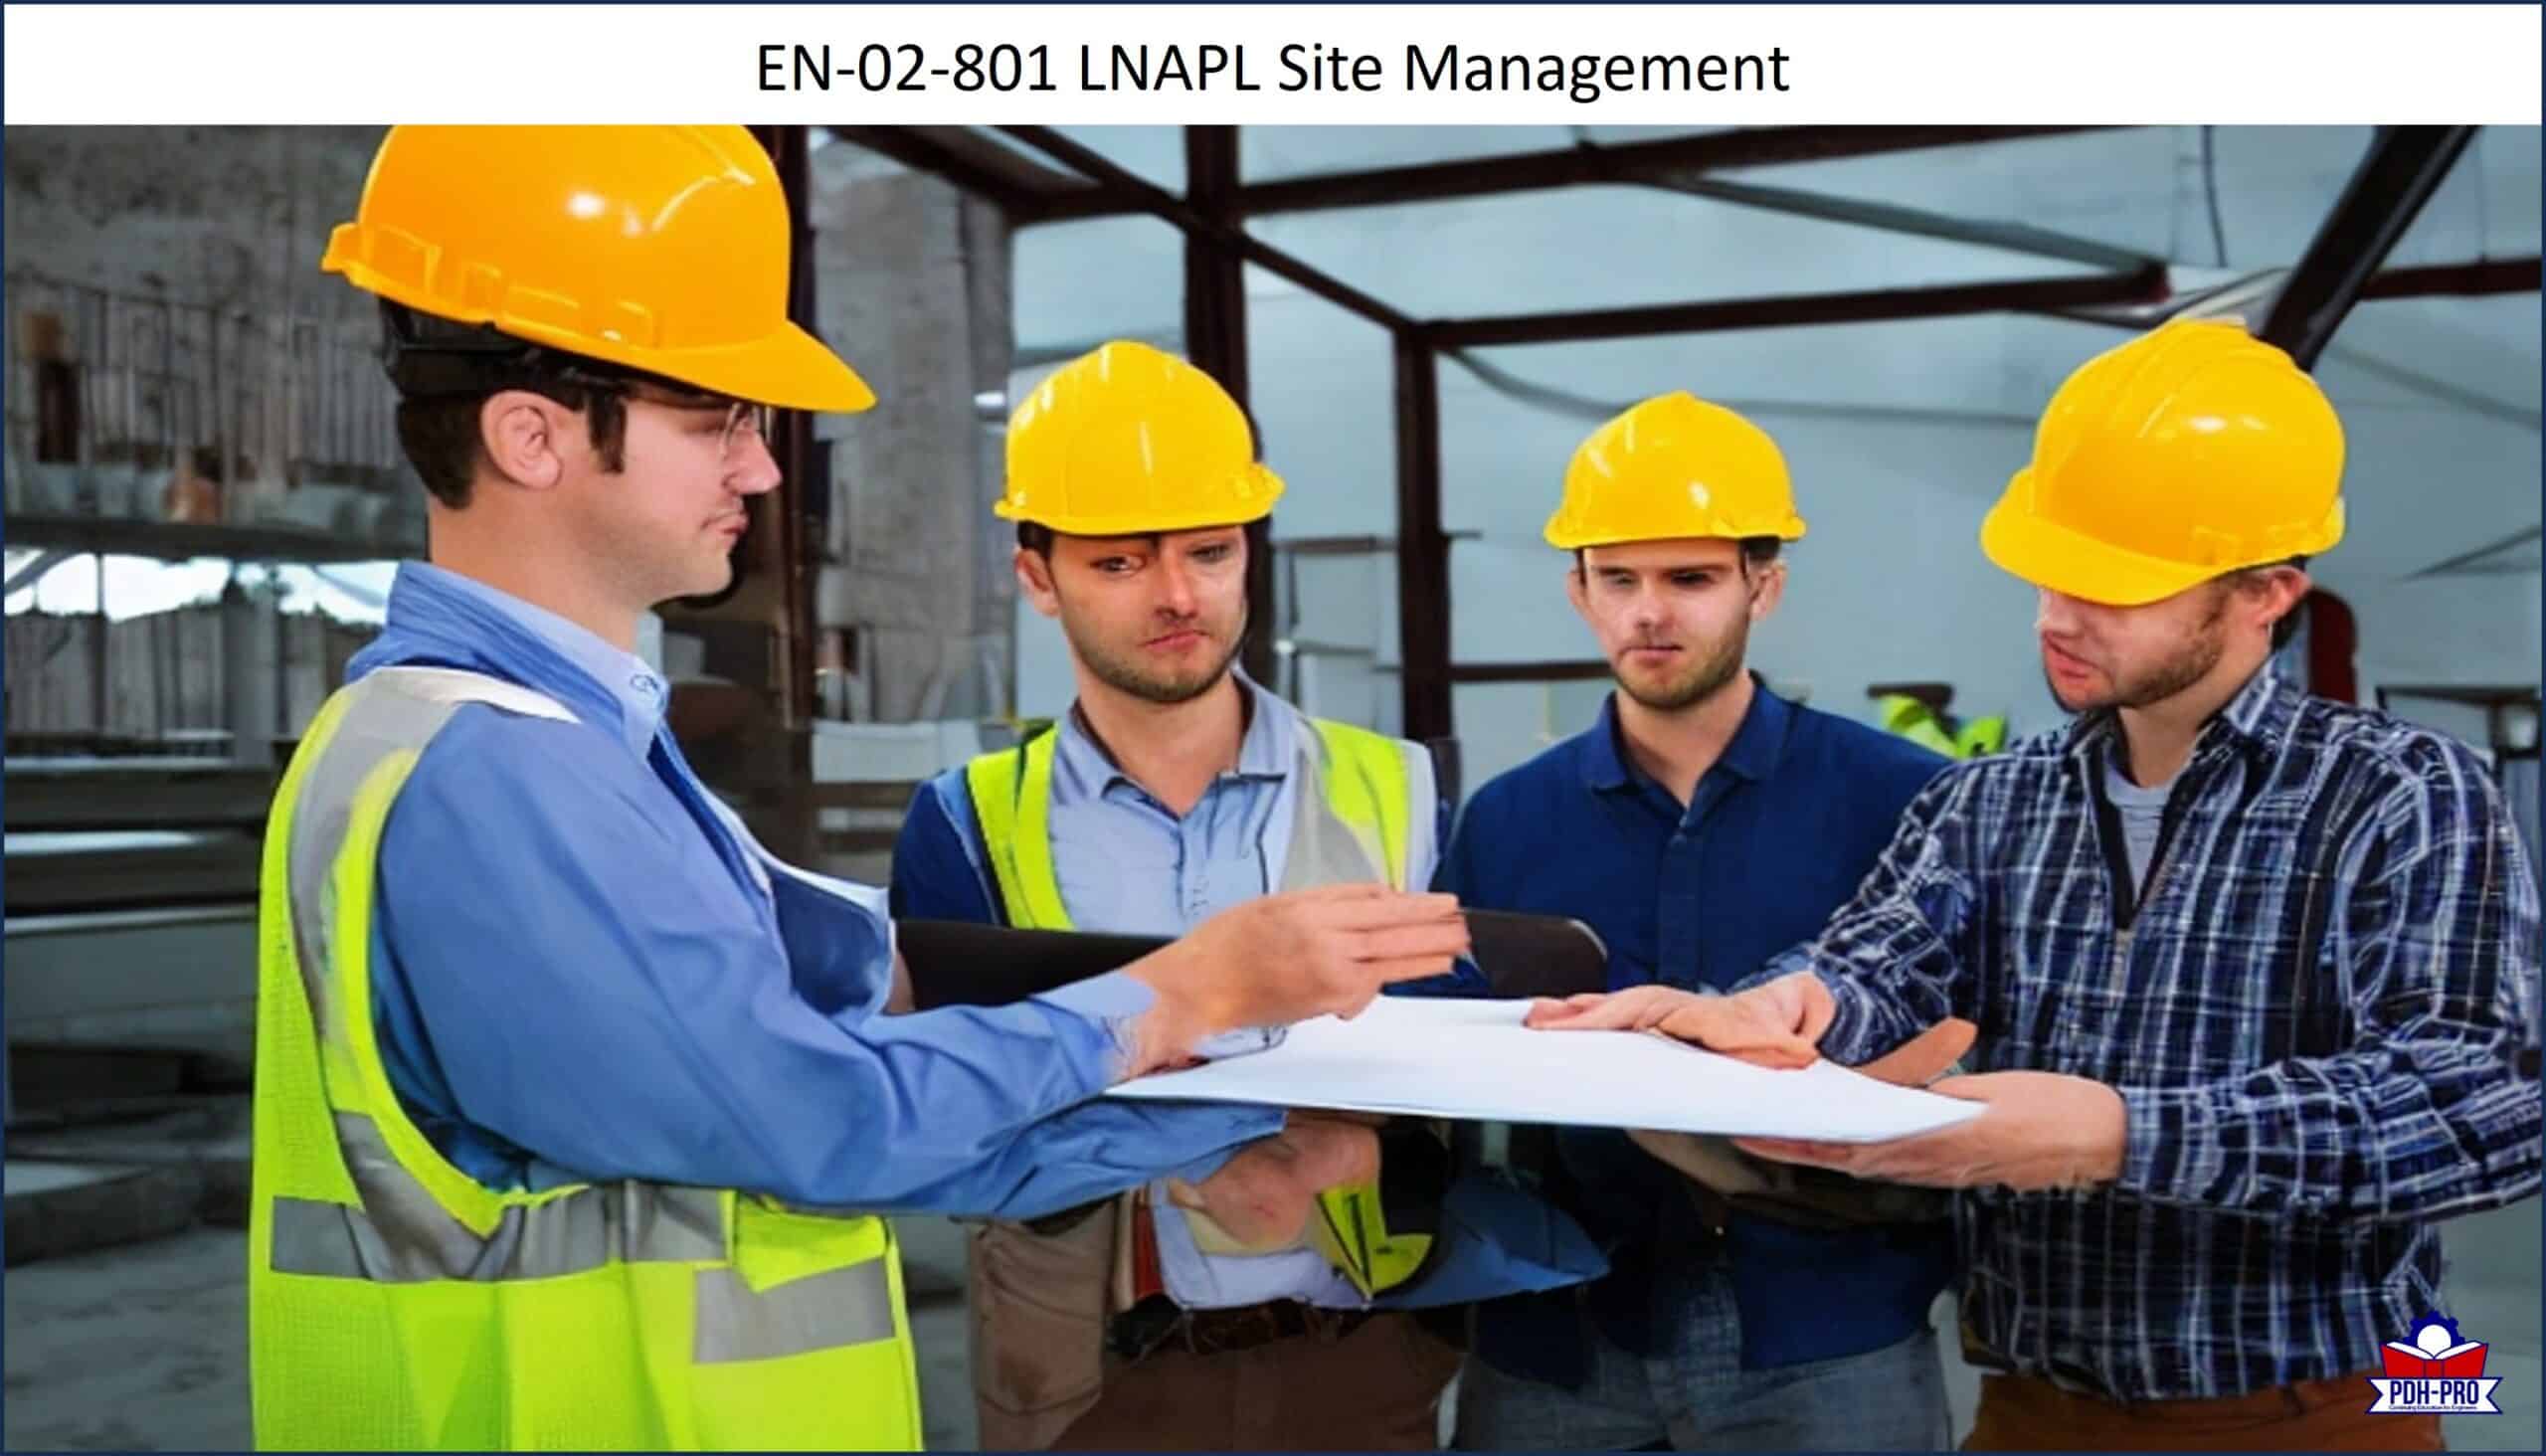 LNAPL Site Management